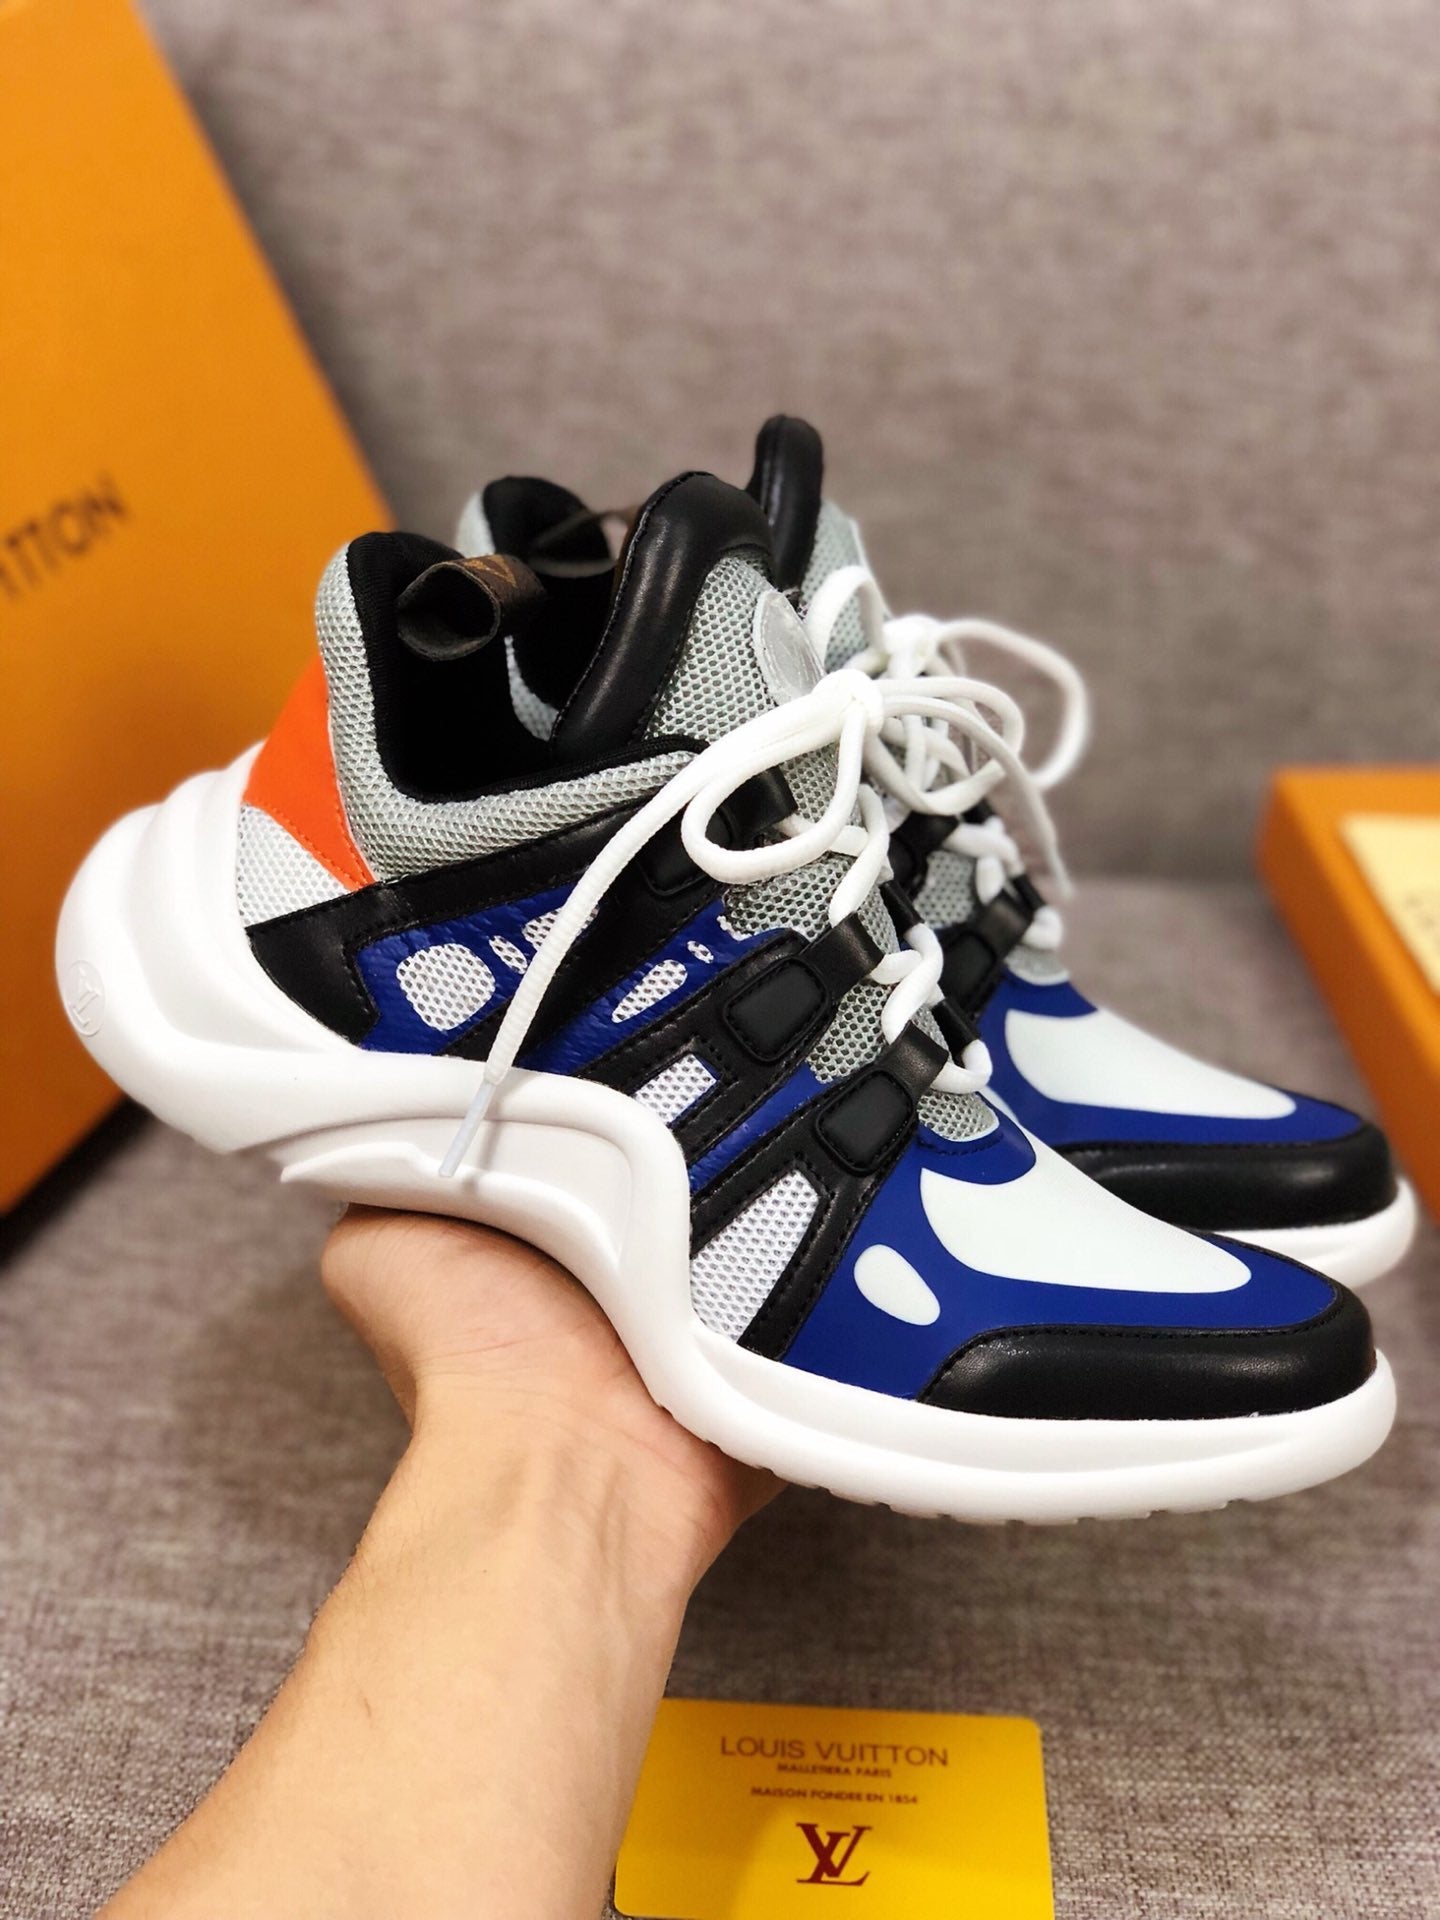 BL - LUV Archlight Blue White Black Sneaker